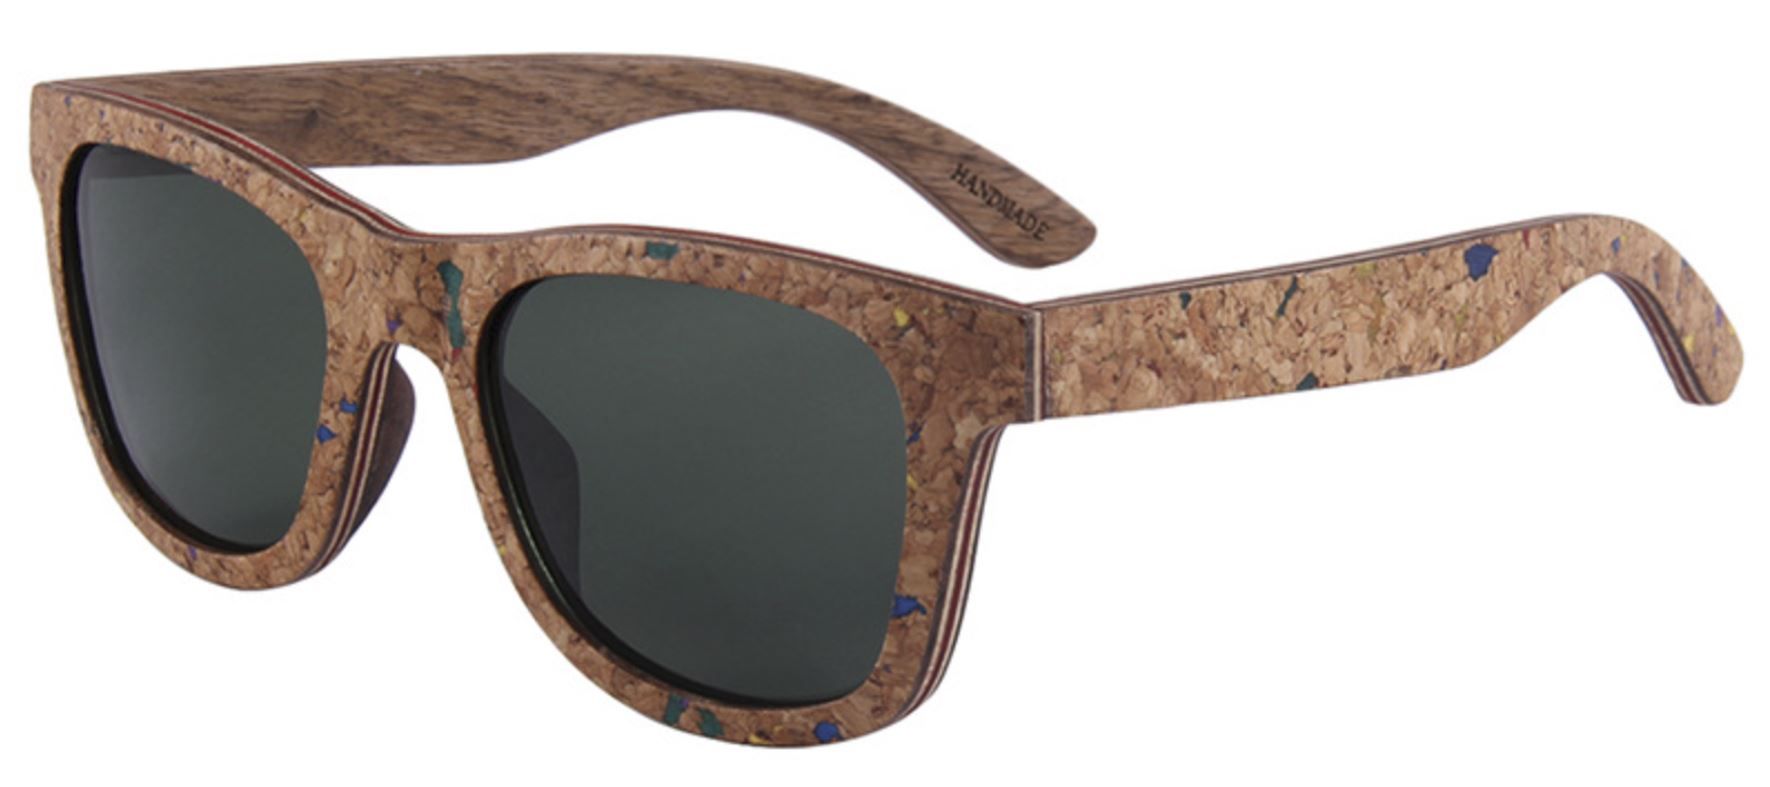 SP-5995 - Cork Sunglasses